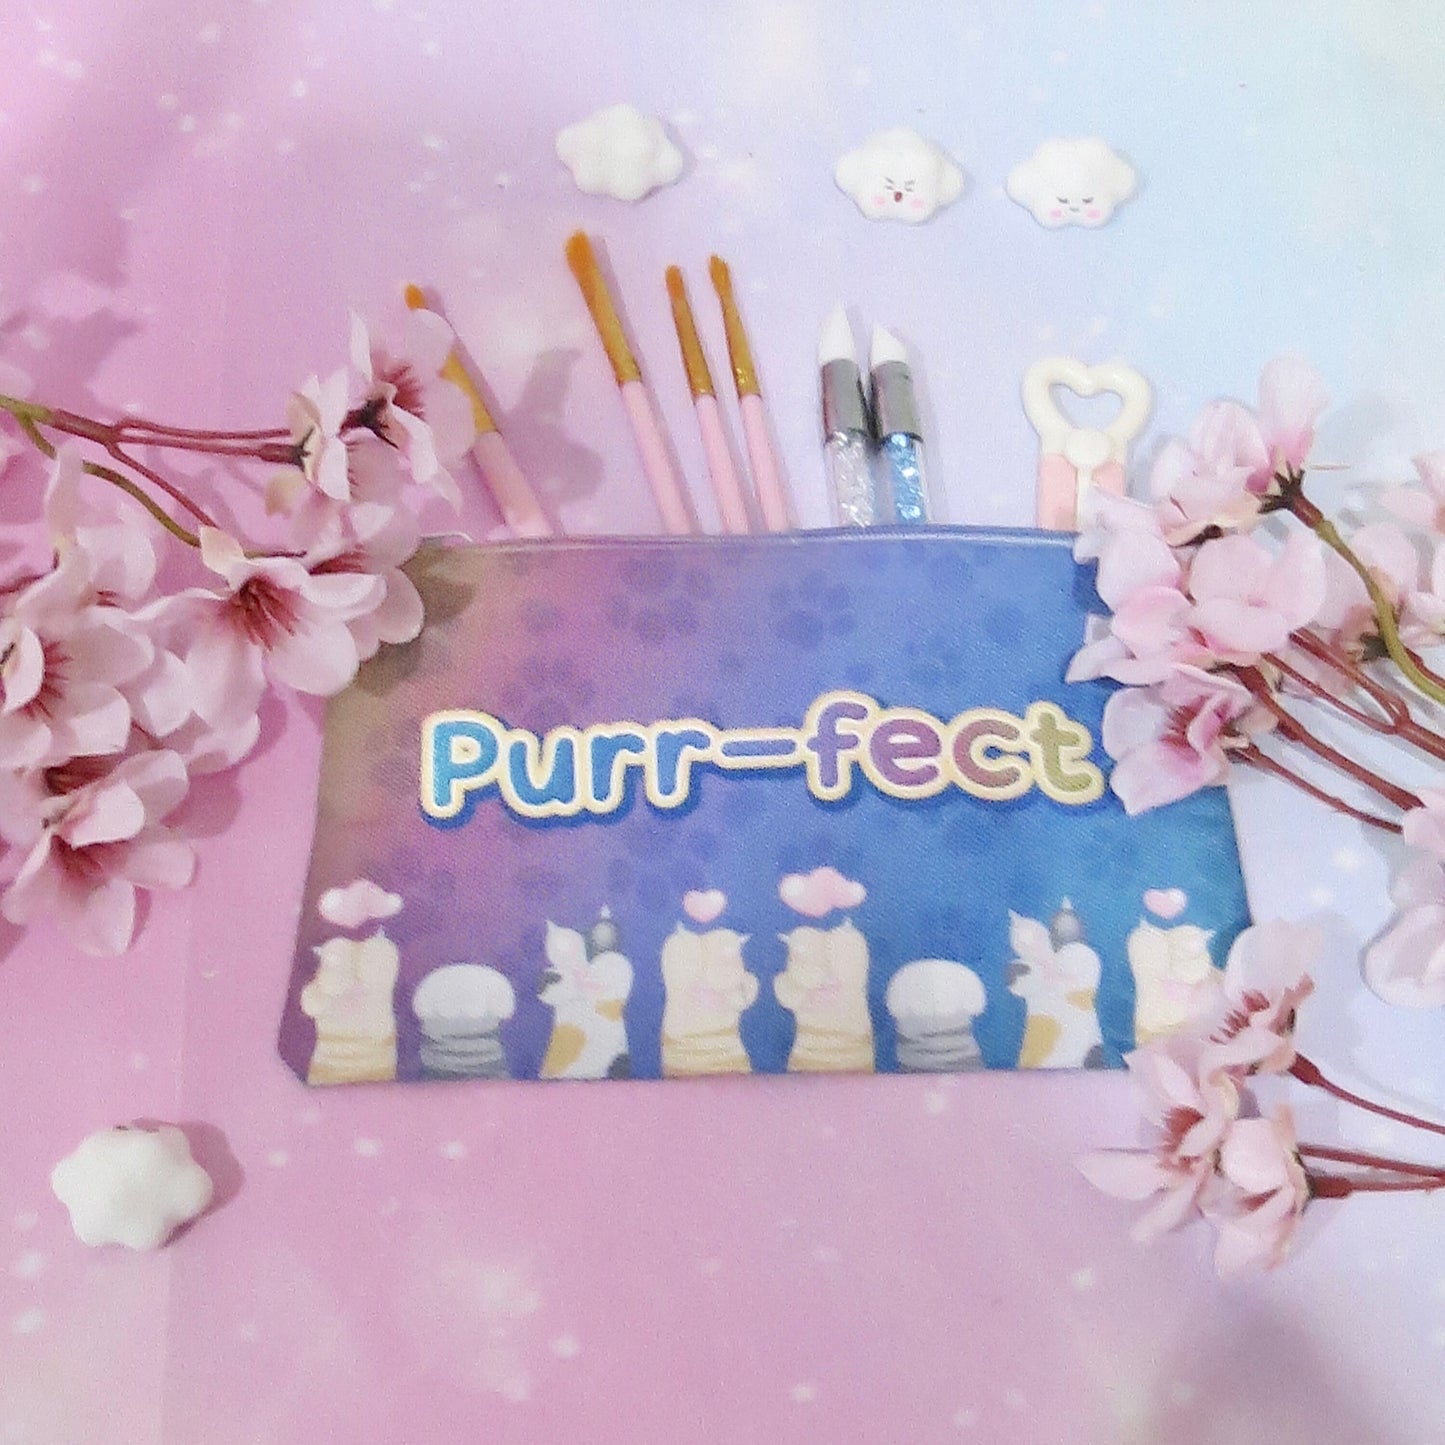 Purr-fect Make-up Bag | make-up bag, makeup bags, cat moms, cat lovers, makeup pouch